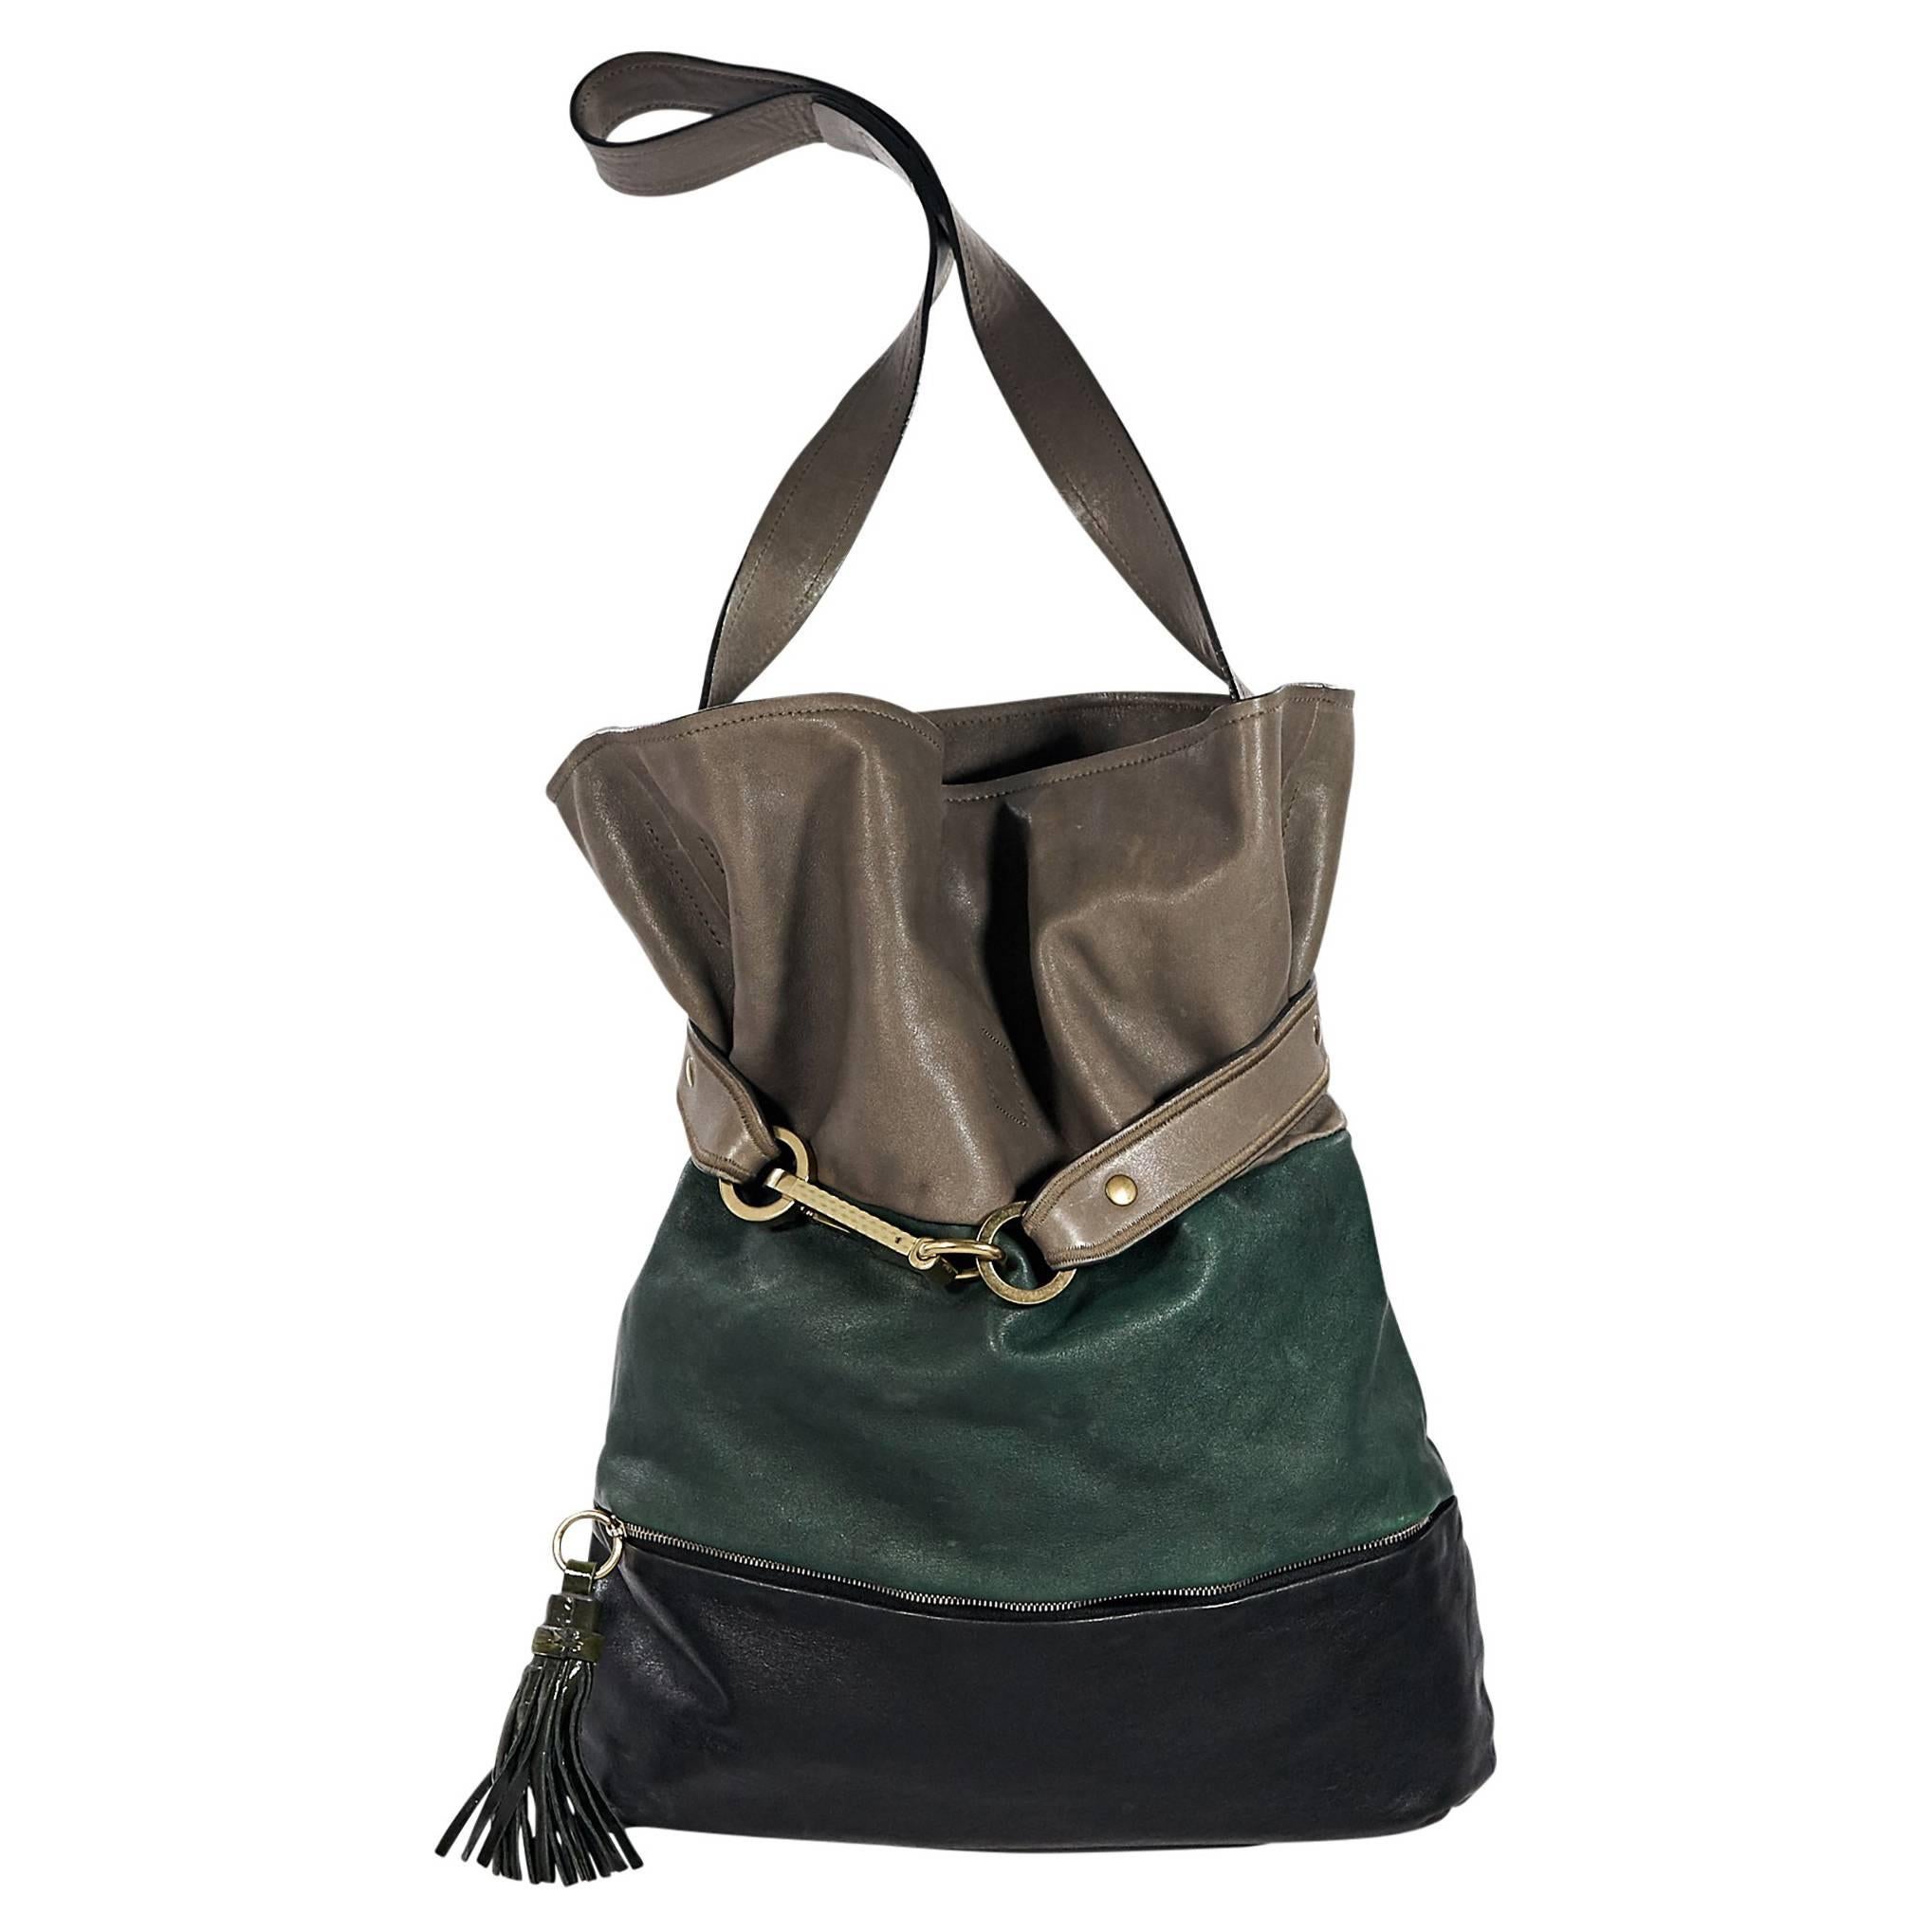 Chloe Leather Colorblock Bag